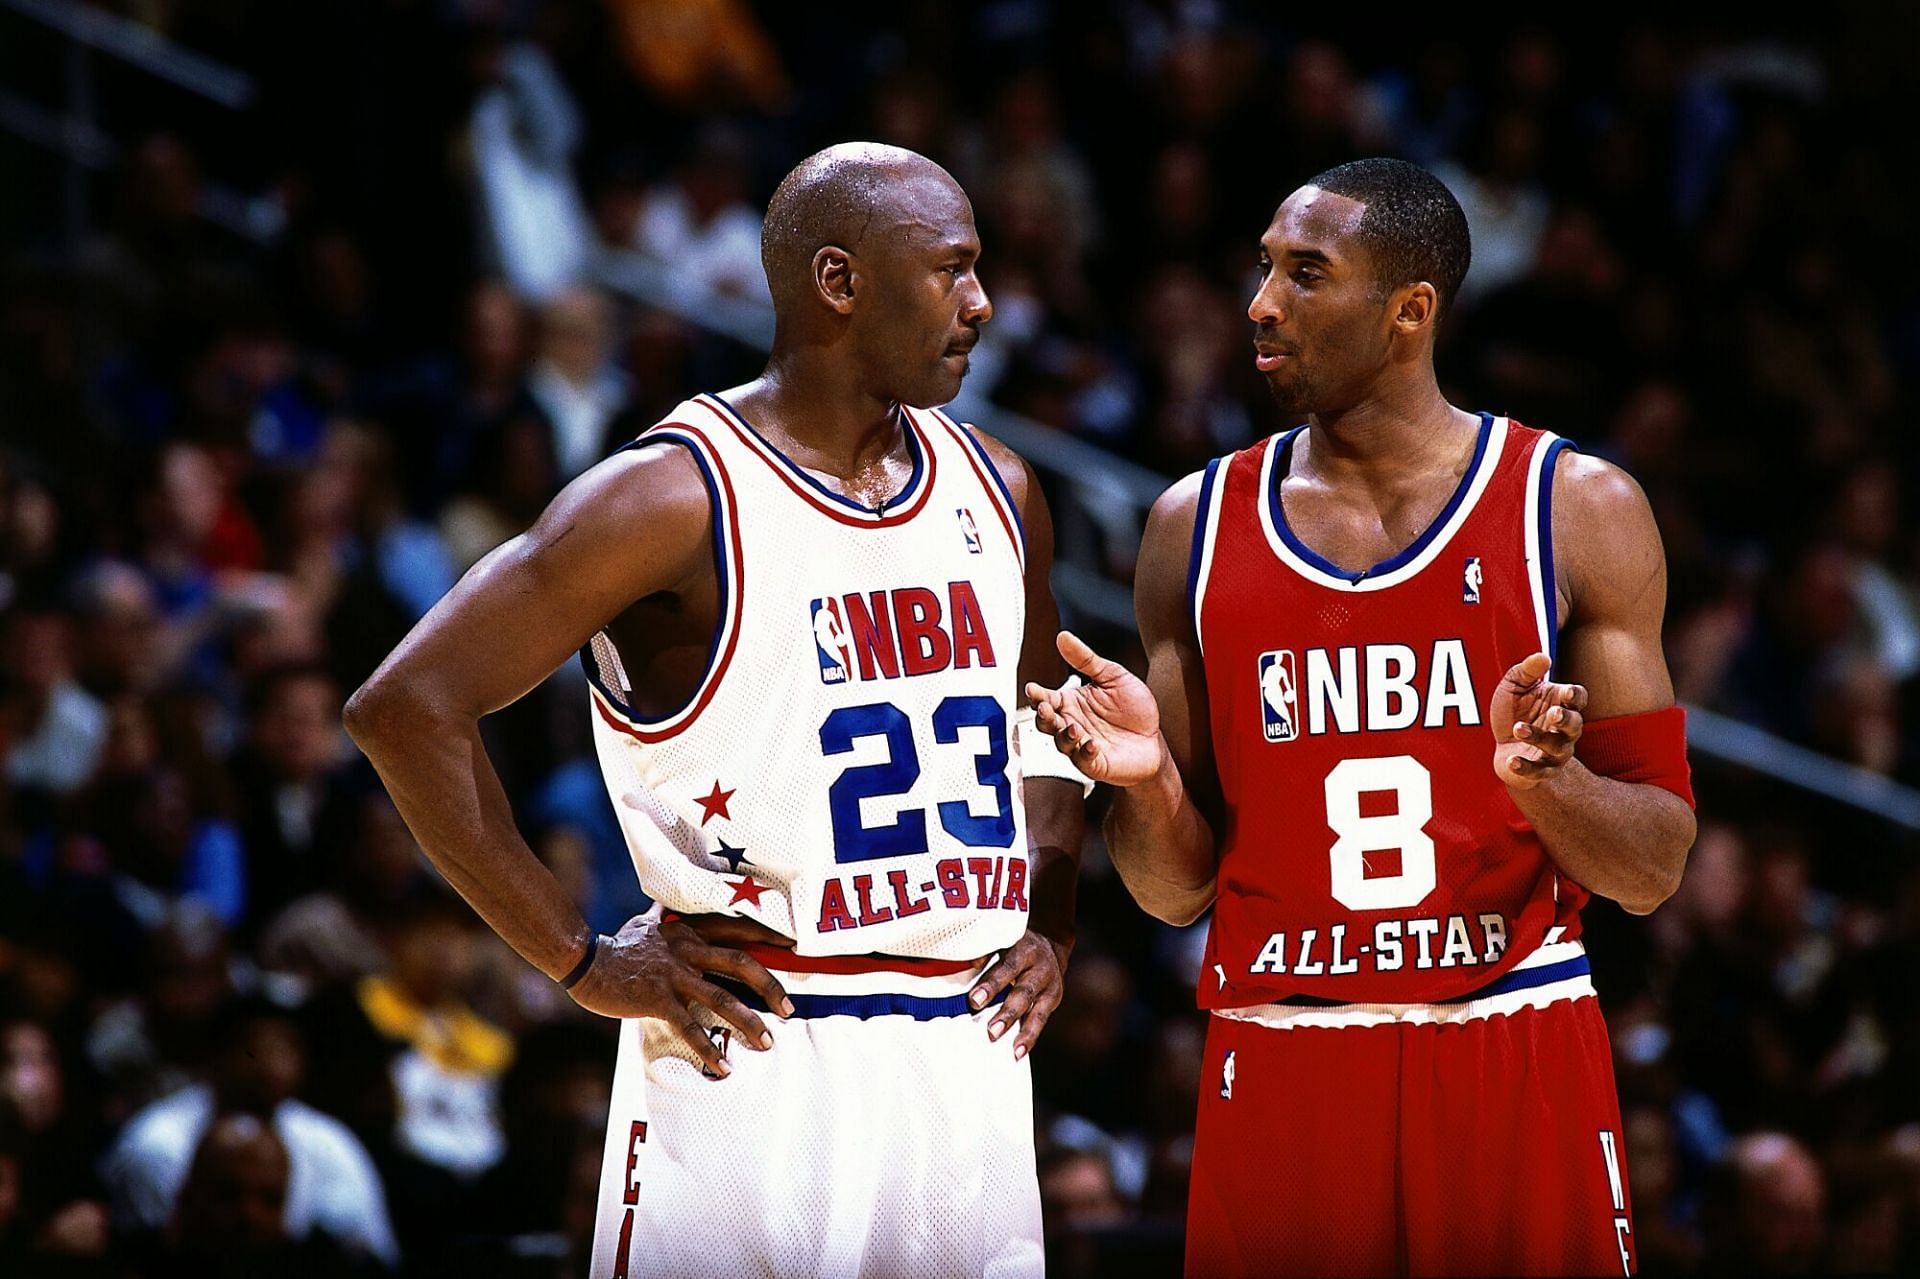 Micael Jordan and Kobe Bryant during an All-Star game.